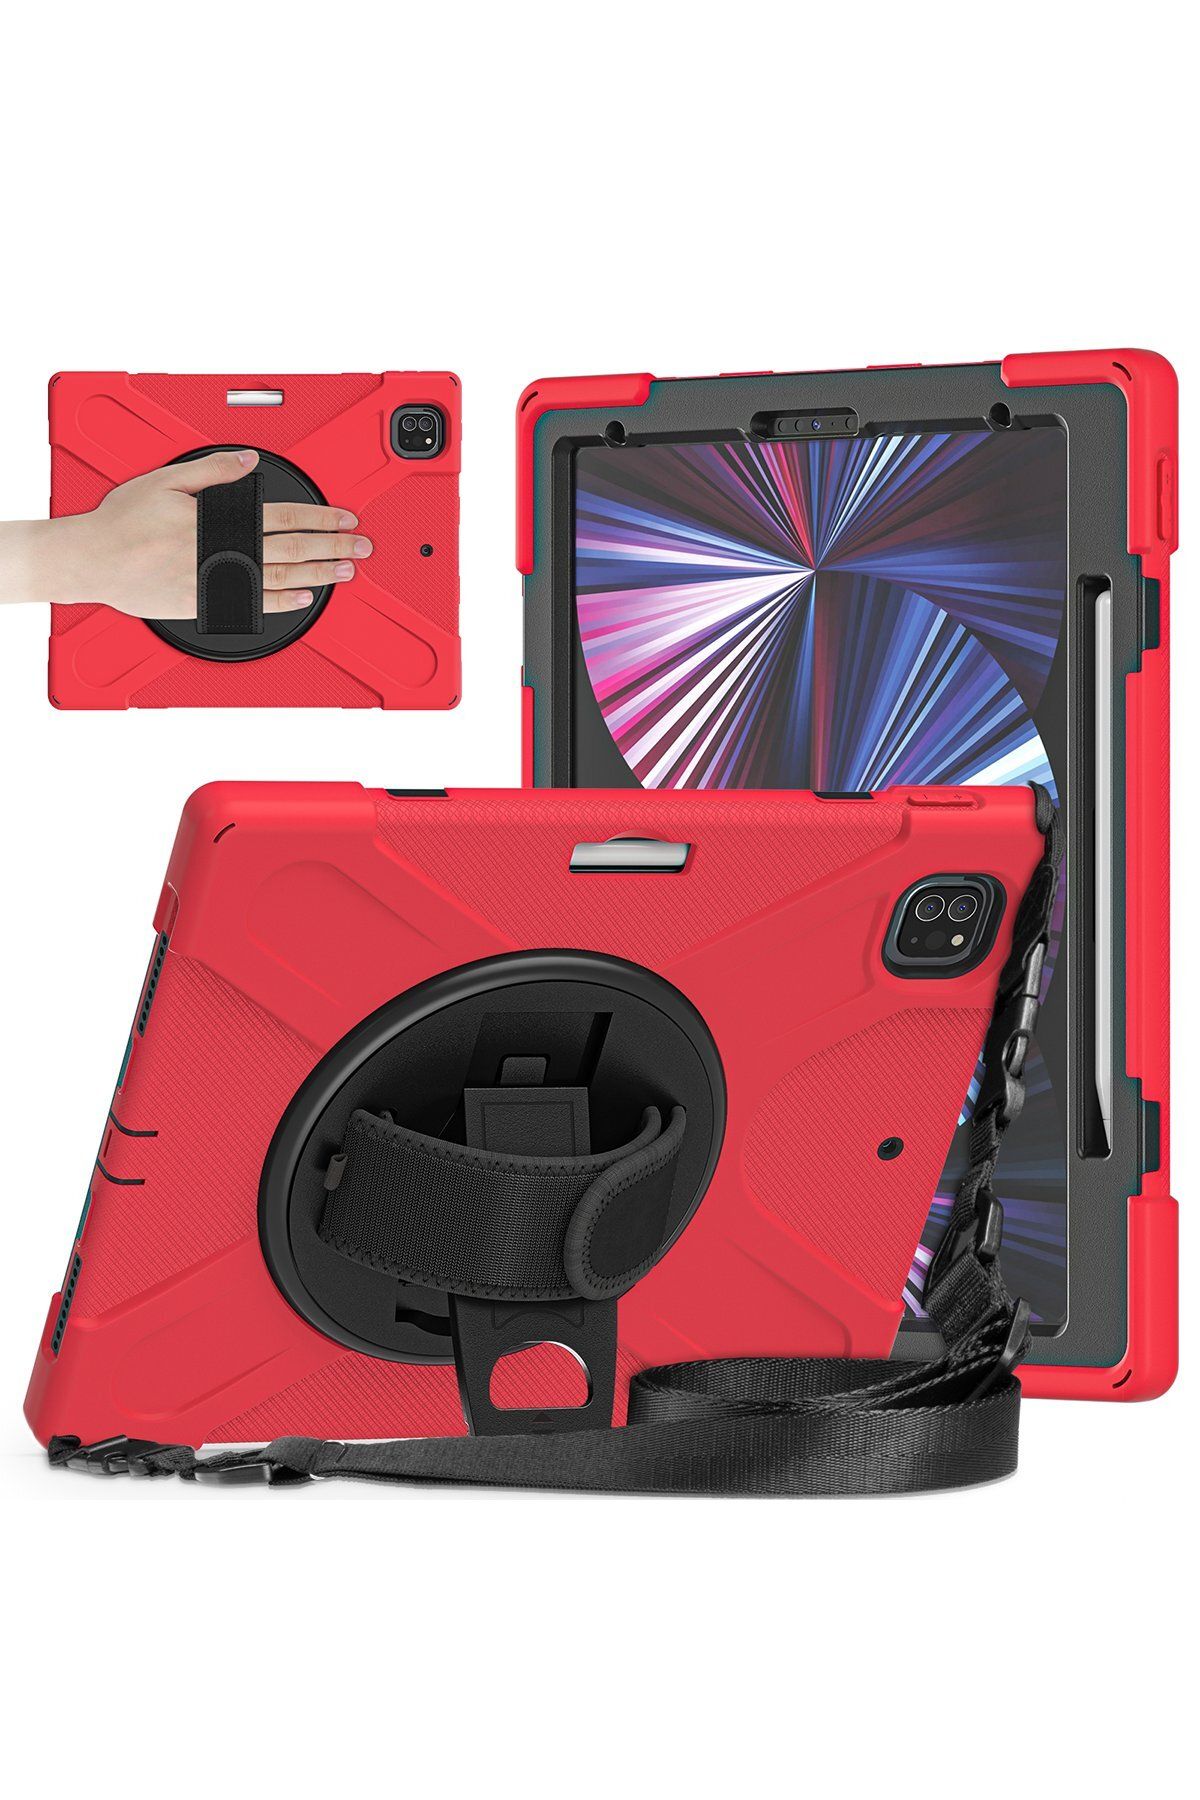 NewFace İpad Pro 12.9 (2020) Kılıf Amazing Tablet Kapak - Kırmızı 317105